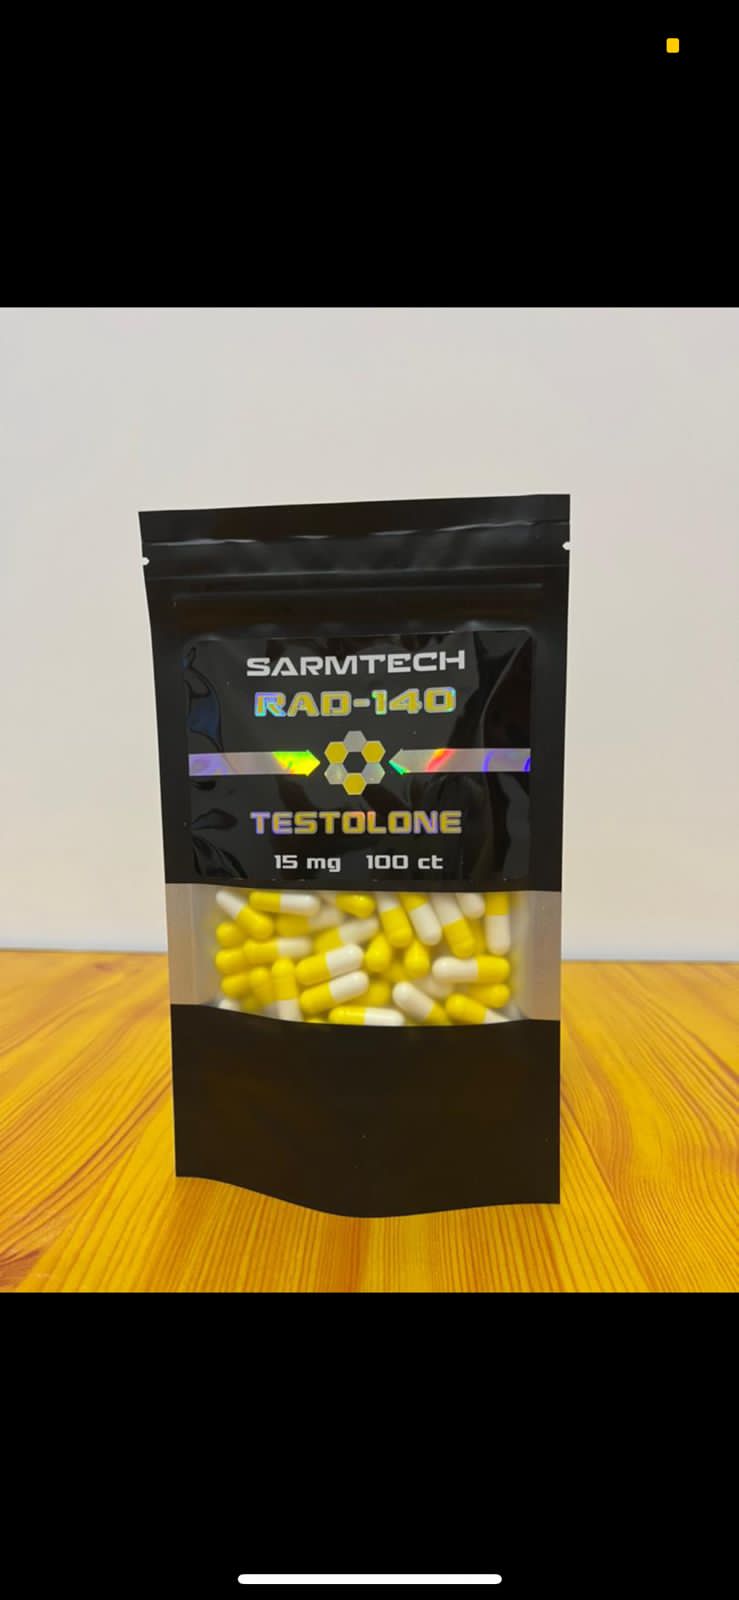 SARMTECH RAD-140 Testalone Радиум 15 мг 100 капс.